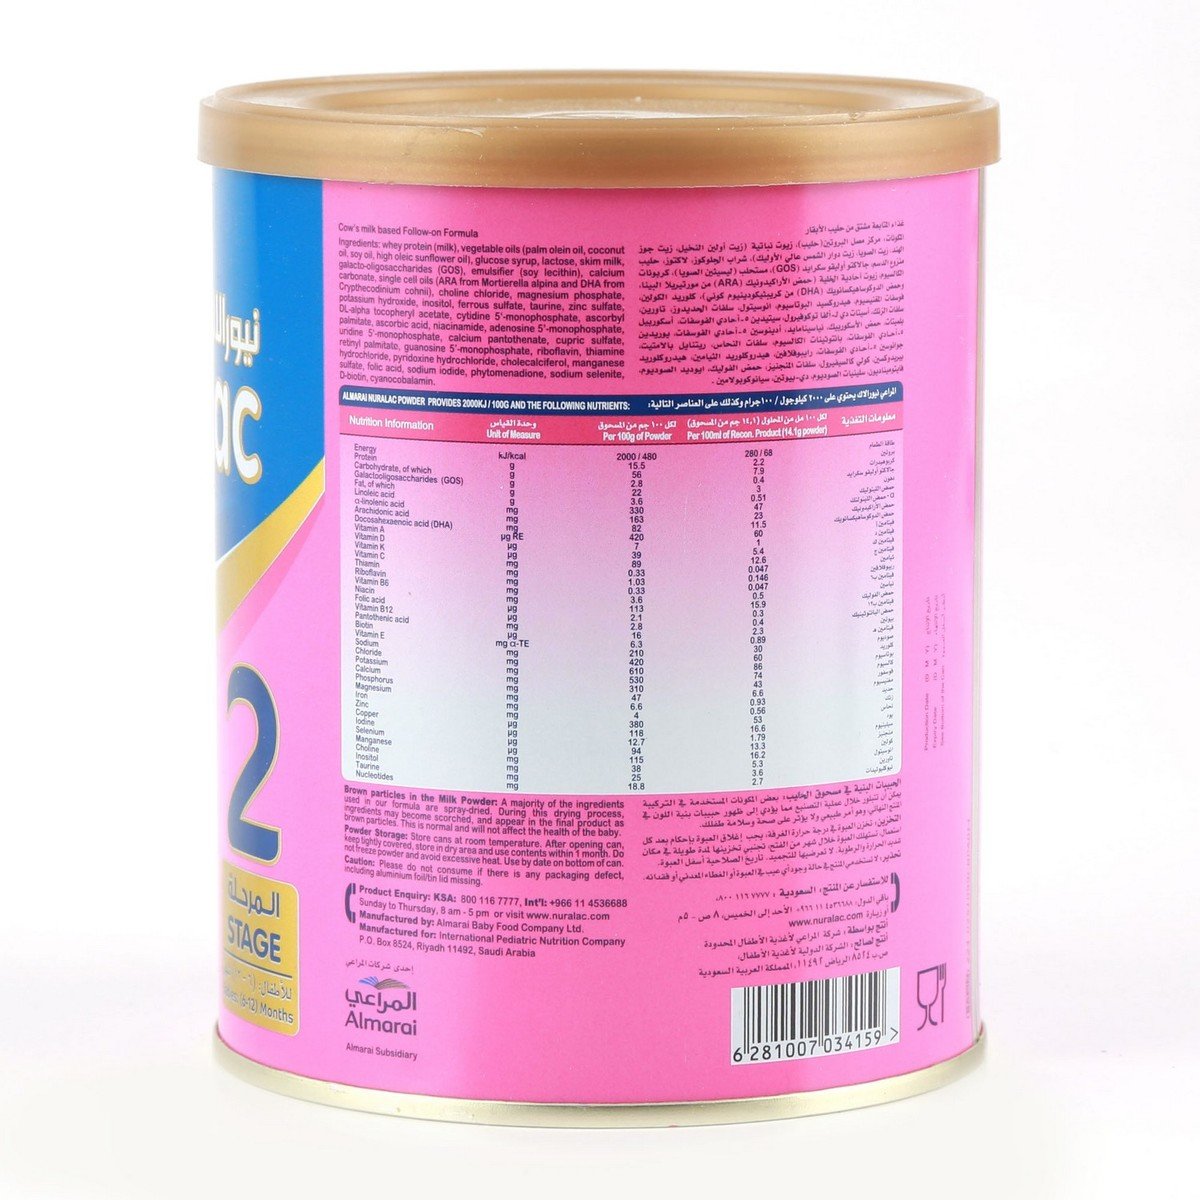 Almarai Nuralac Baby Milk Powder Stage 2 400 g